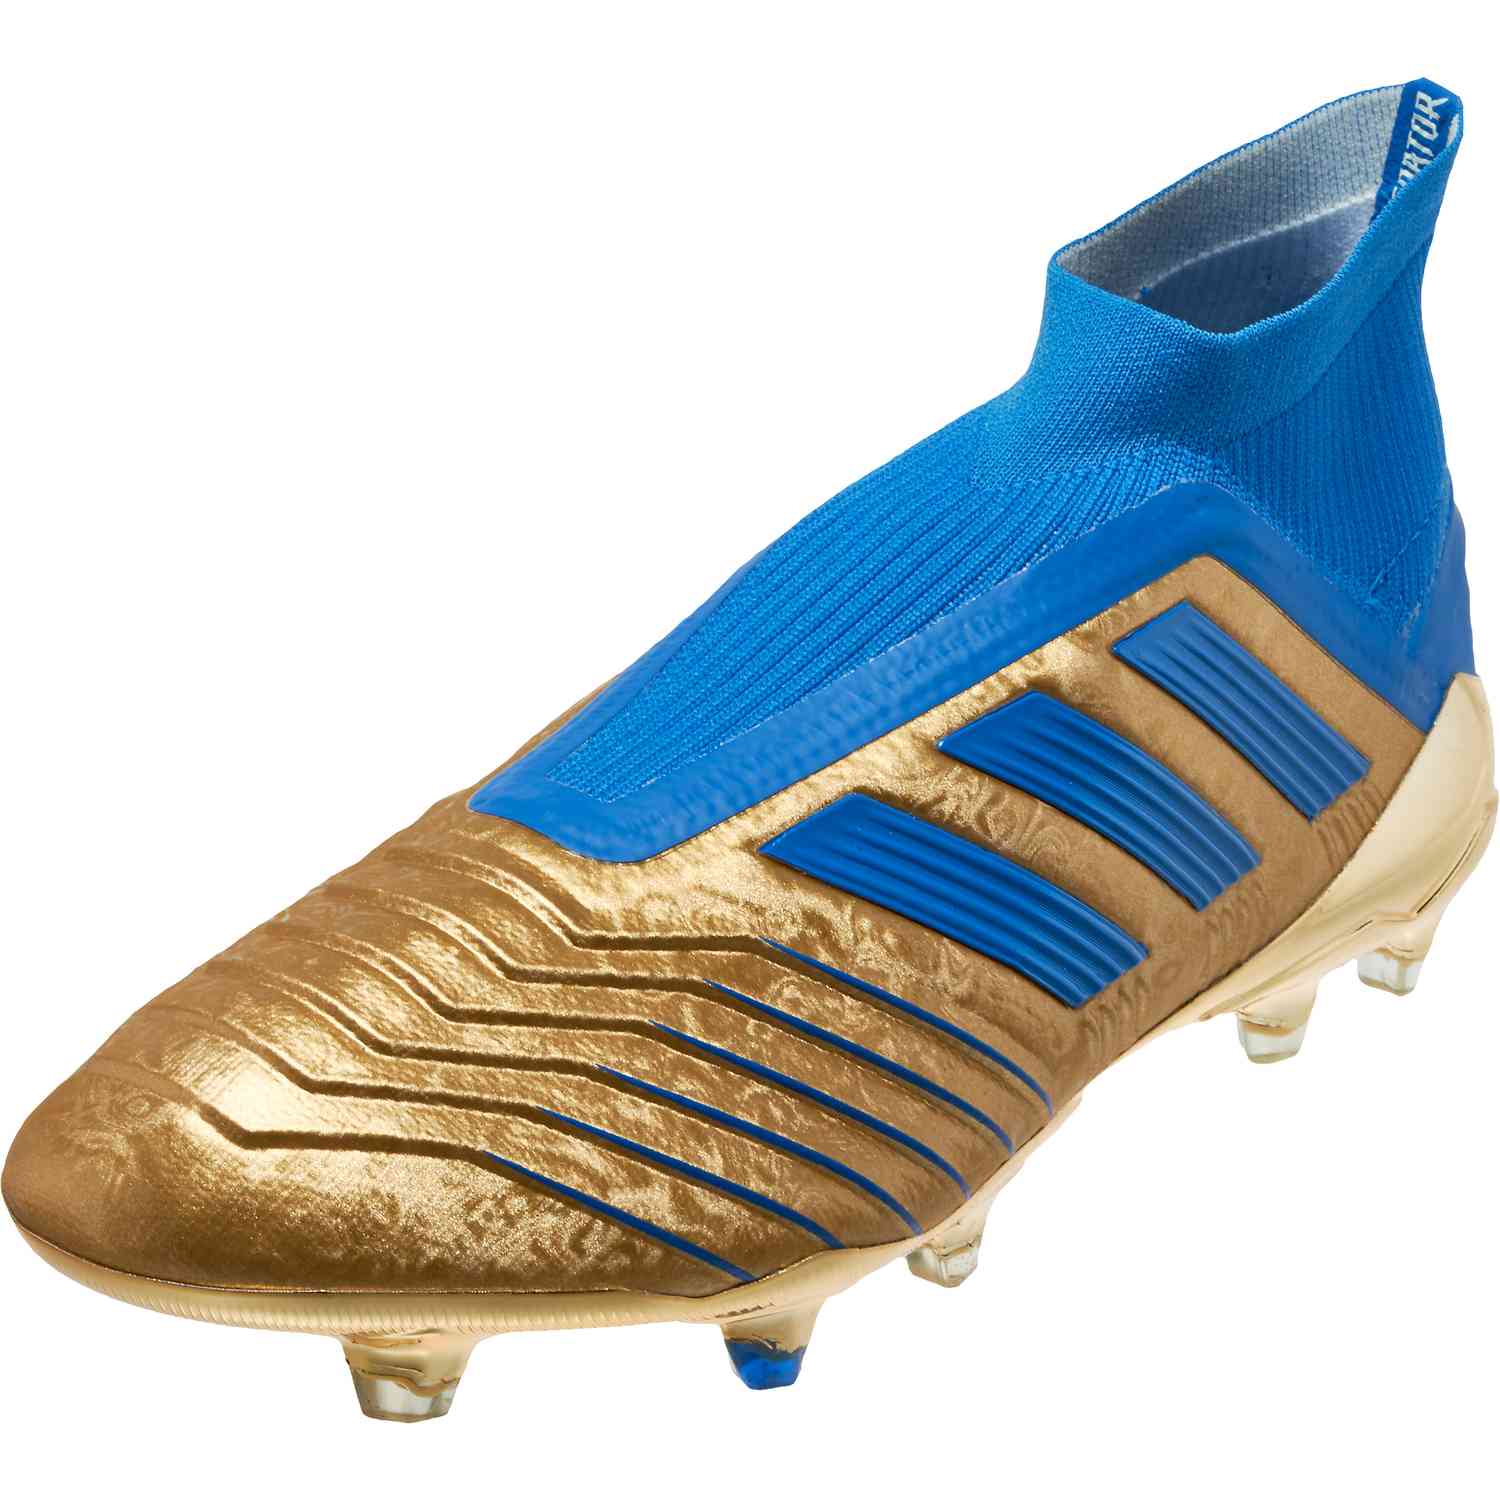 adidas predator 19 blue and gold